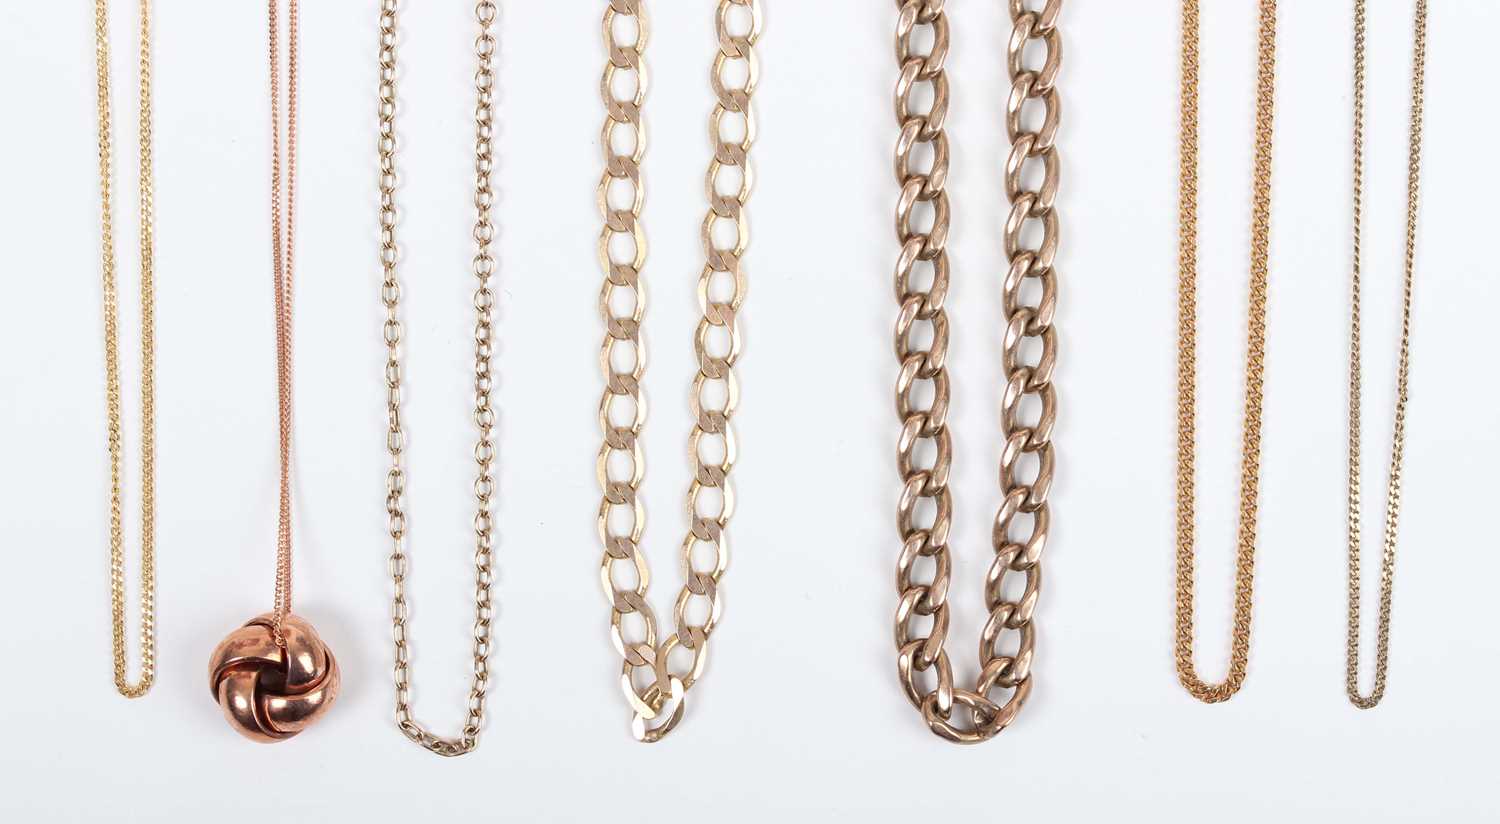 Four 9ct gold neckchains, including a curblink neckchain on a boltring clasp, length 49cm,